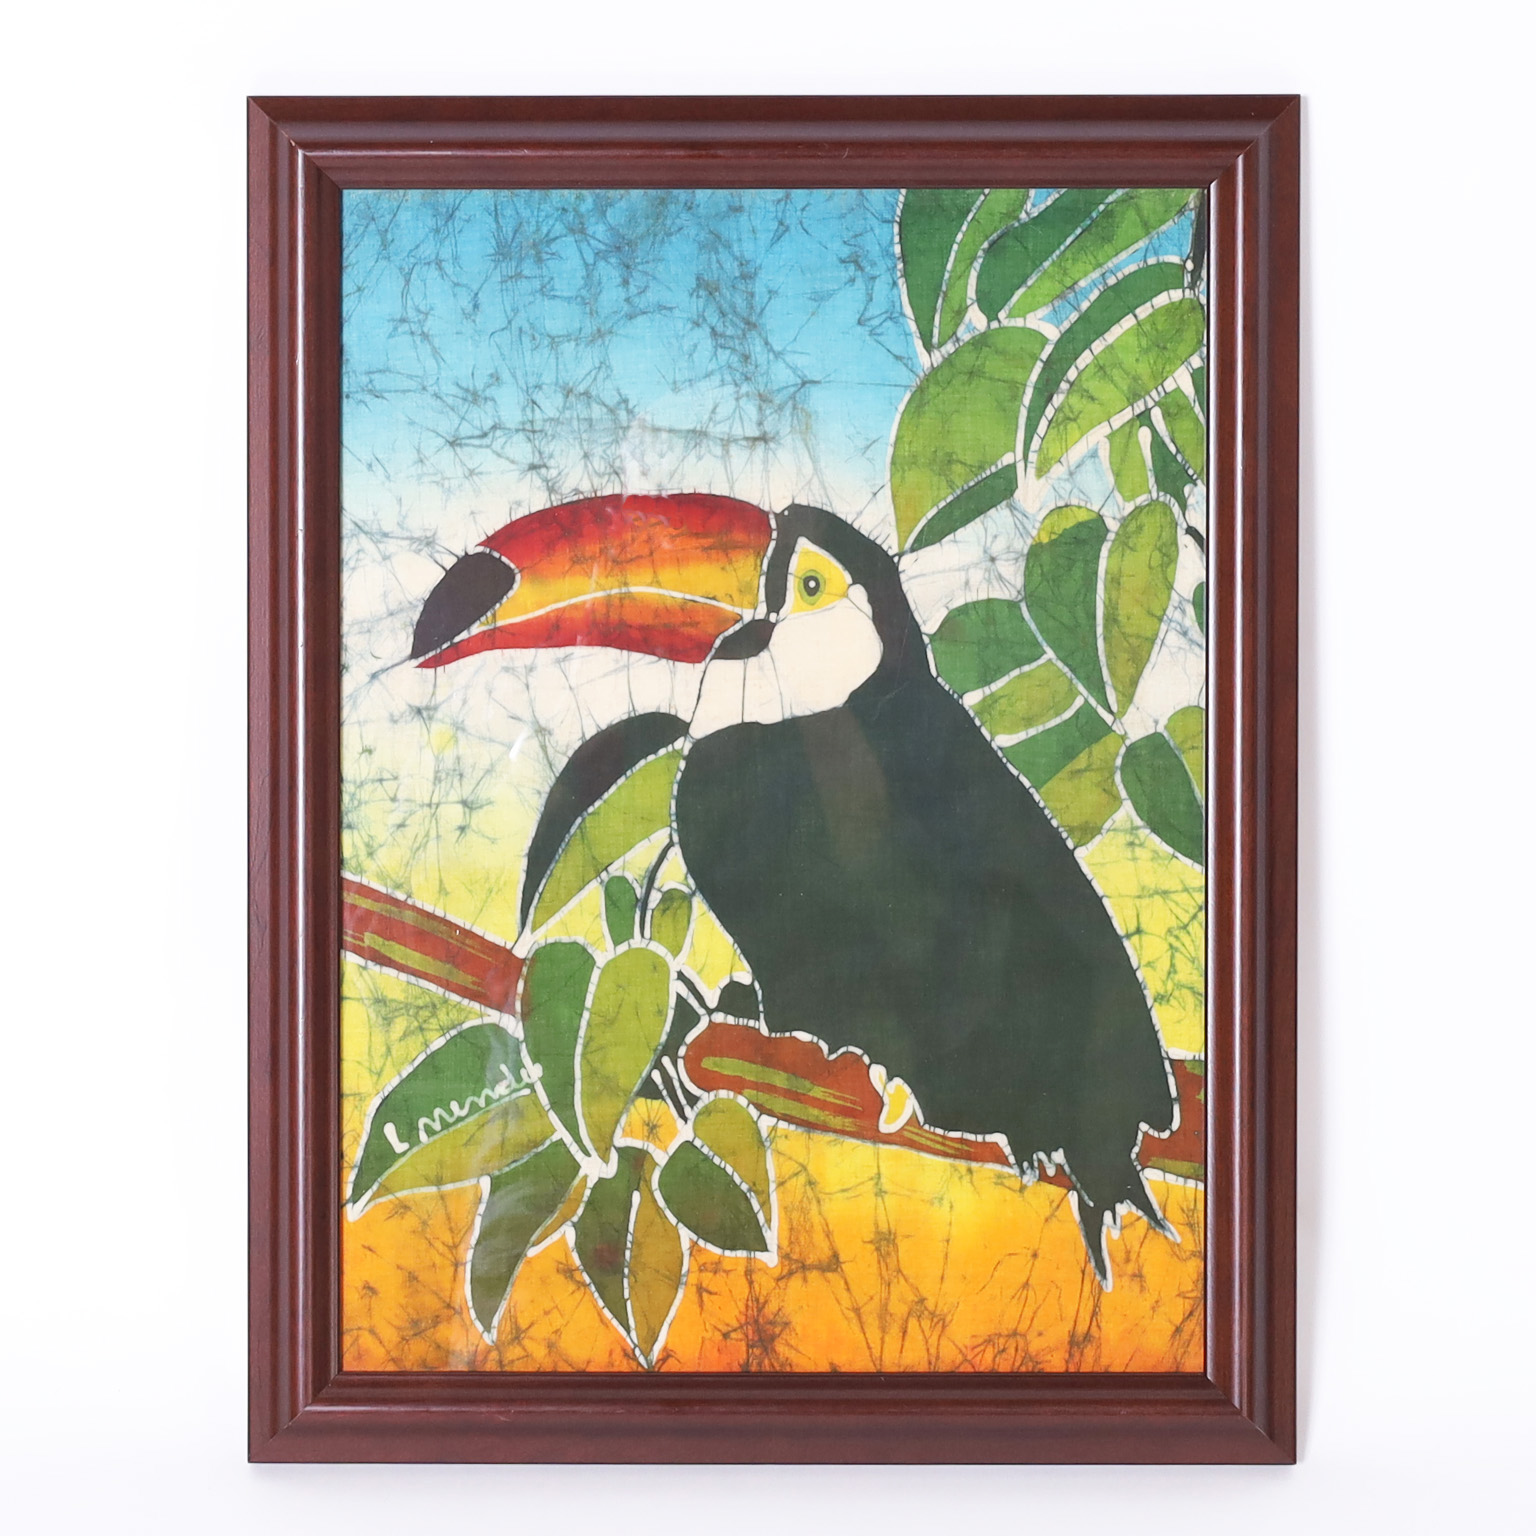 Batik Artwork of a Toucan on Silk